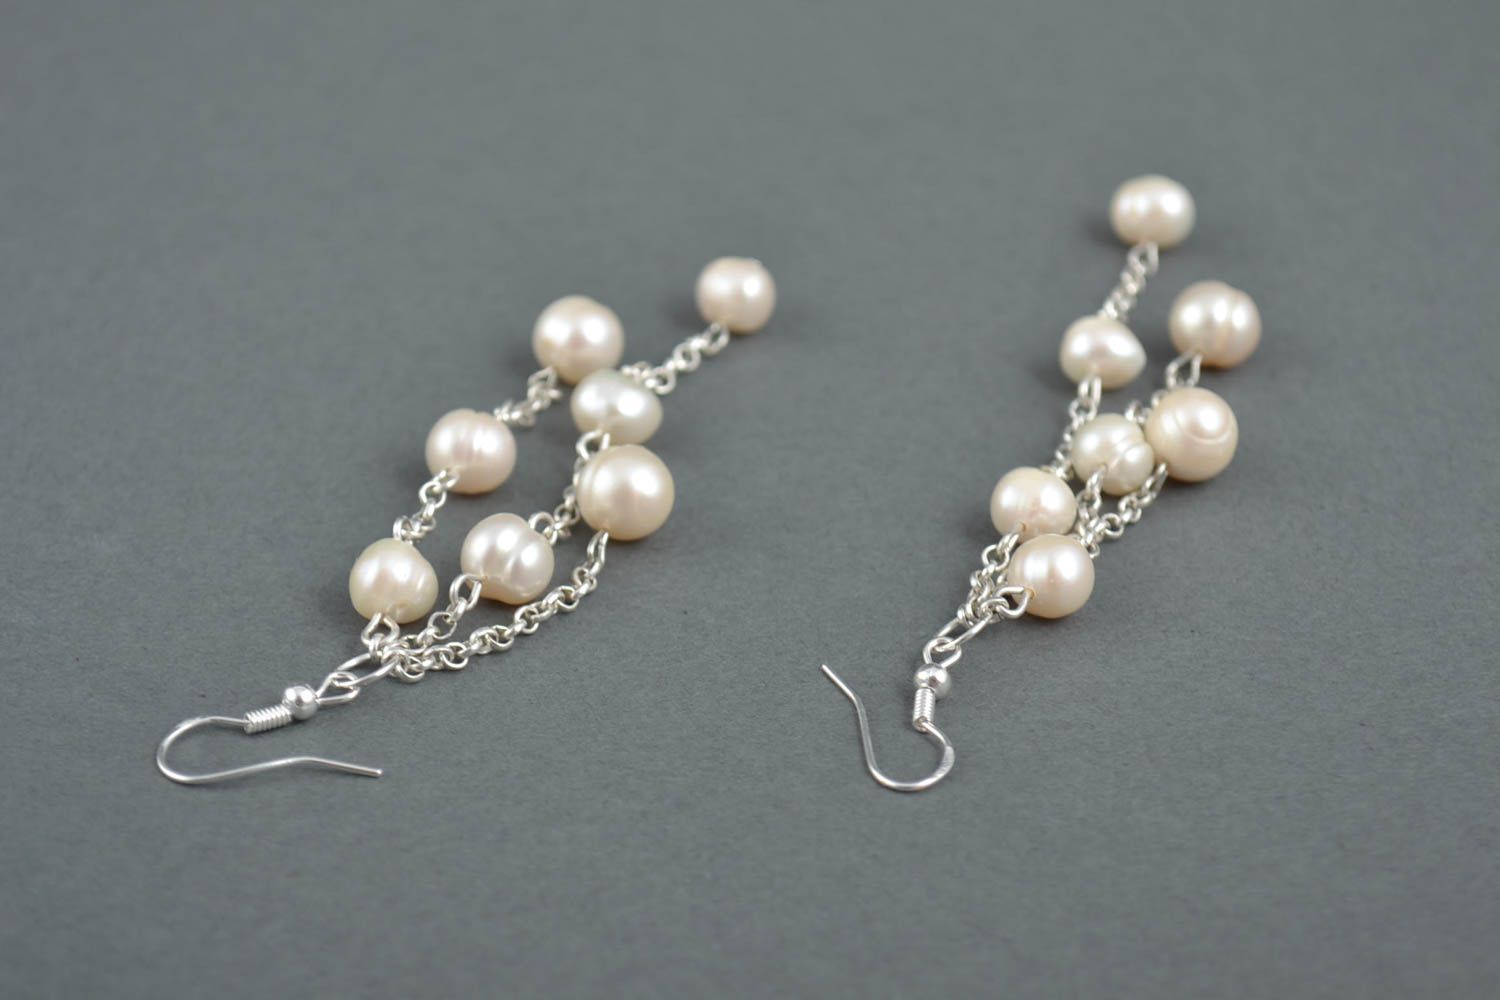 Dangling earrings handmade pearl jewelry long earrings fashion accessories photo 3